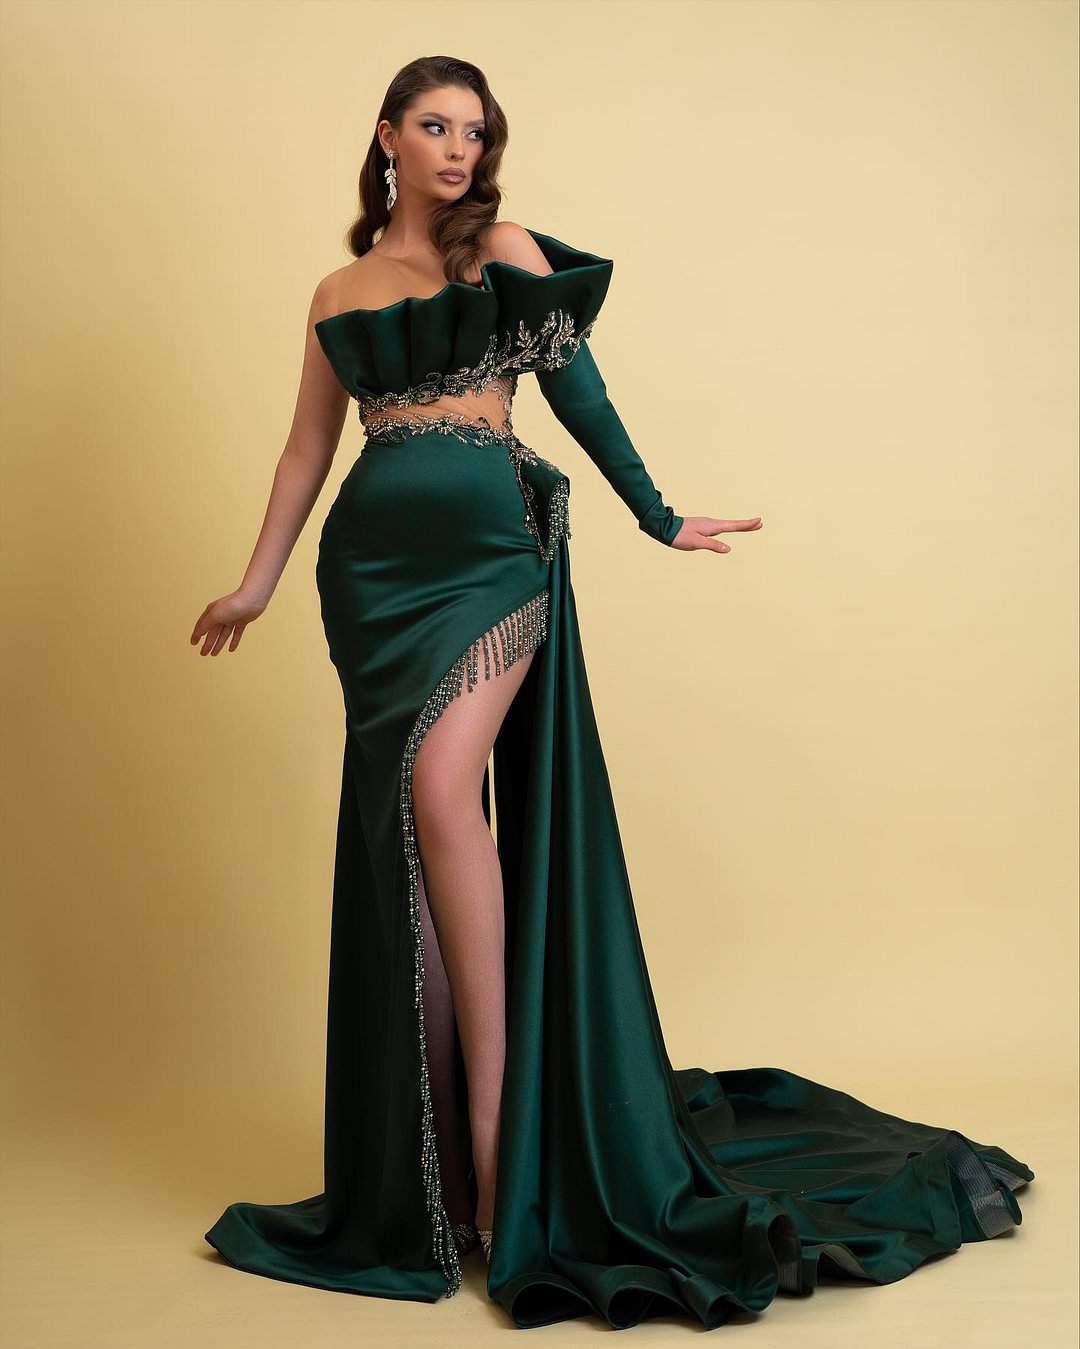 Daisda Dark Green One Long Sleeve Beaded Split Evening Dress Gown With Tassels